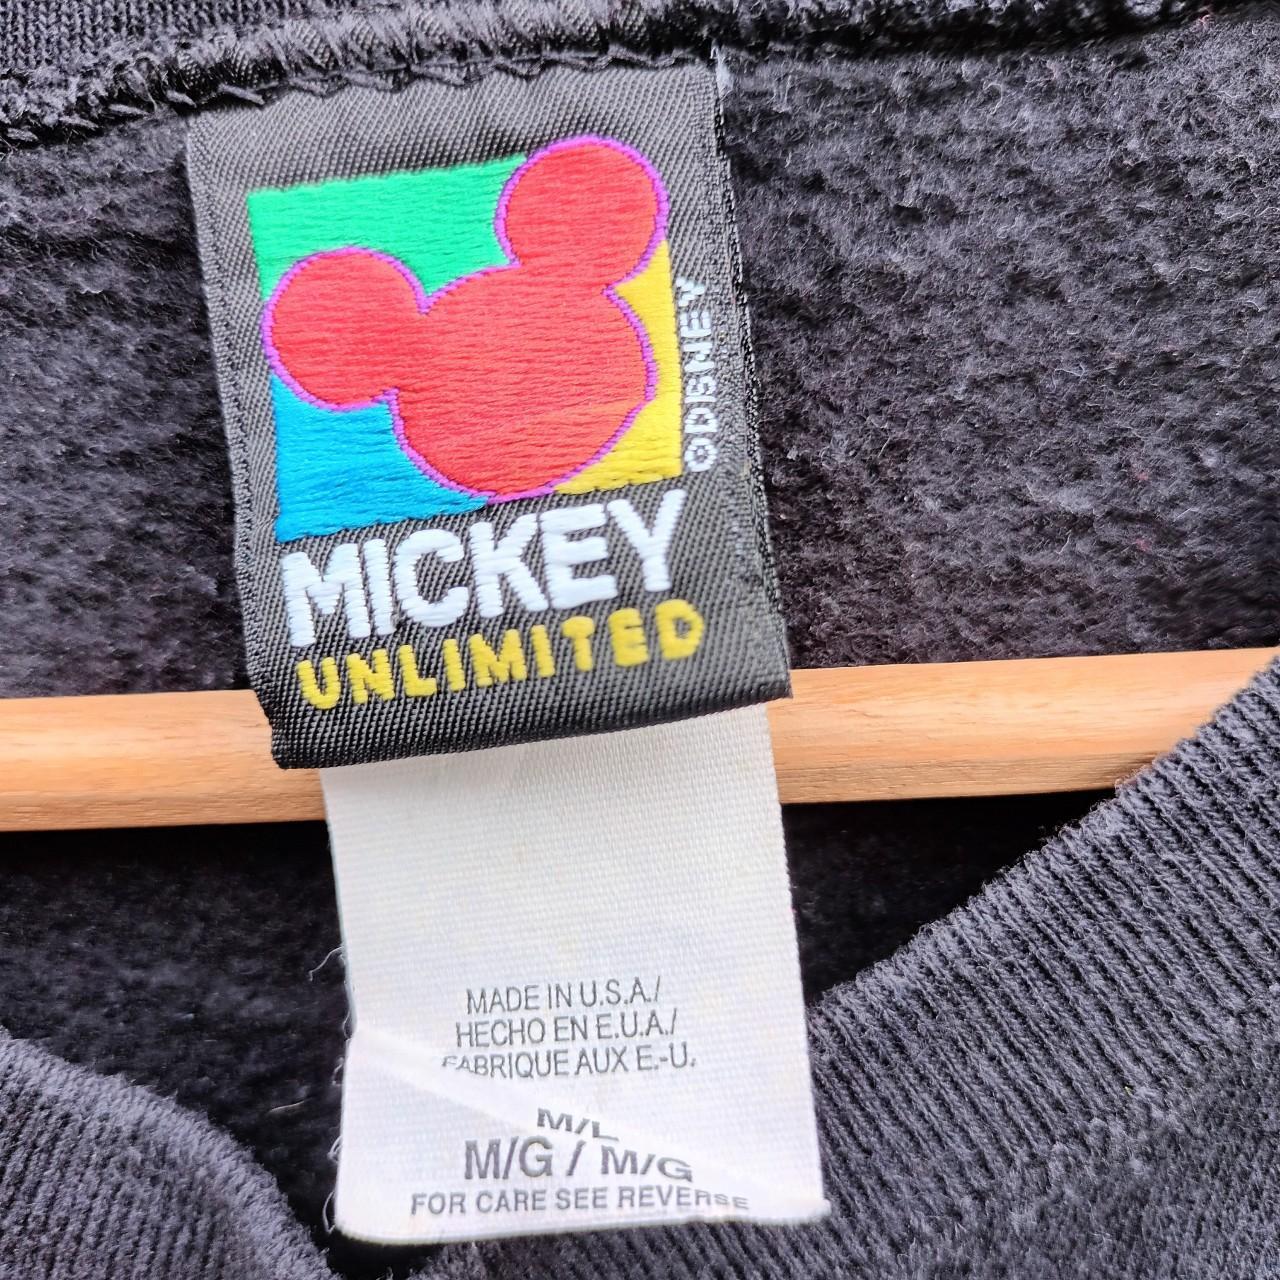 Disney Mickey Mouse sweater M/L